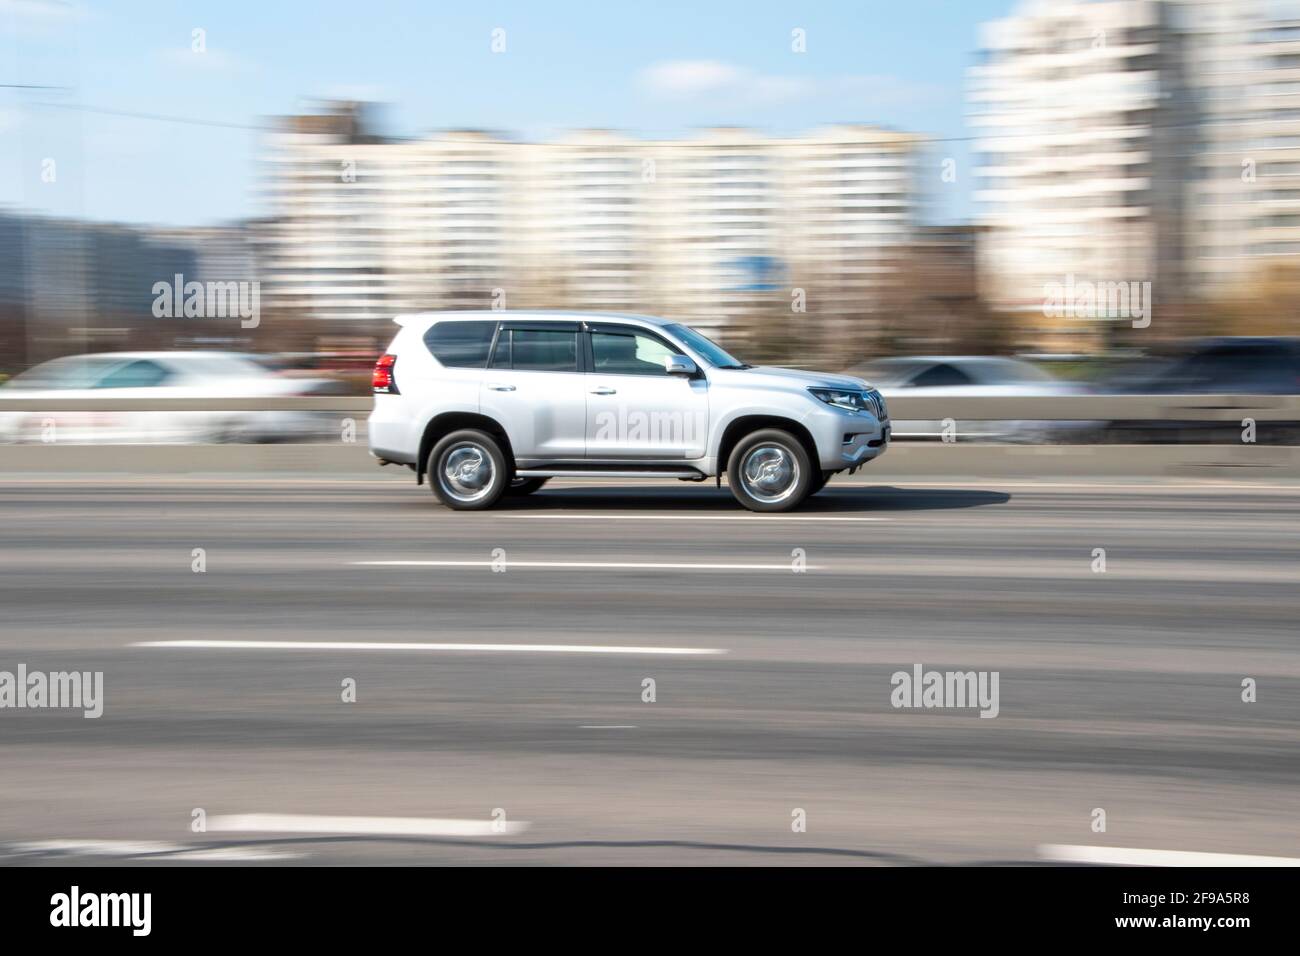 Ukraine, Kyiv - 4 April 2021: Silver Toyota Land Cruiser Prado car moving on the street. Editorial Stock Photo